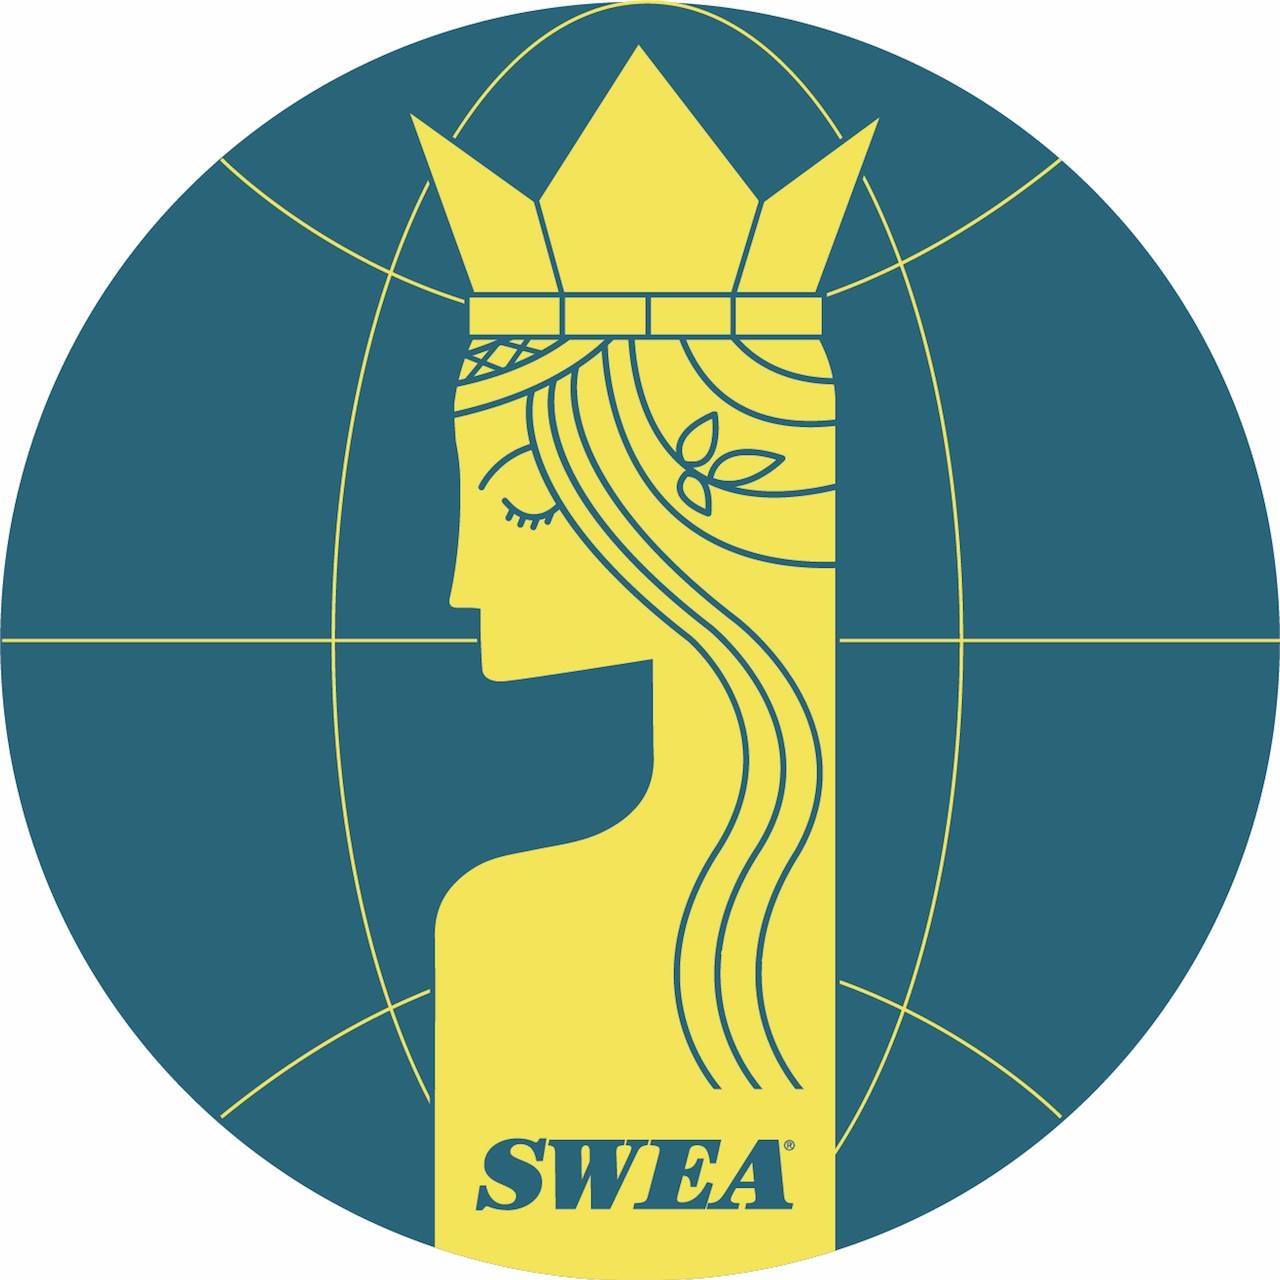 Swedish Speaking Organization in Los Angeles California - Swedish Women’s Educational Association Orange County